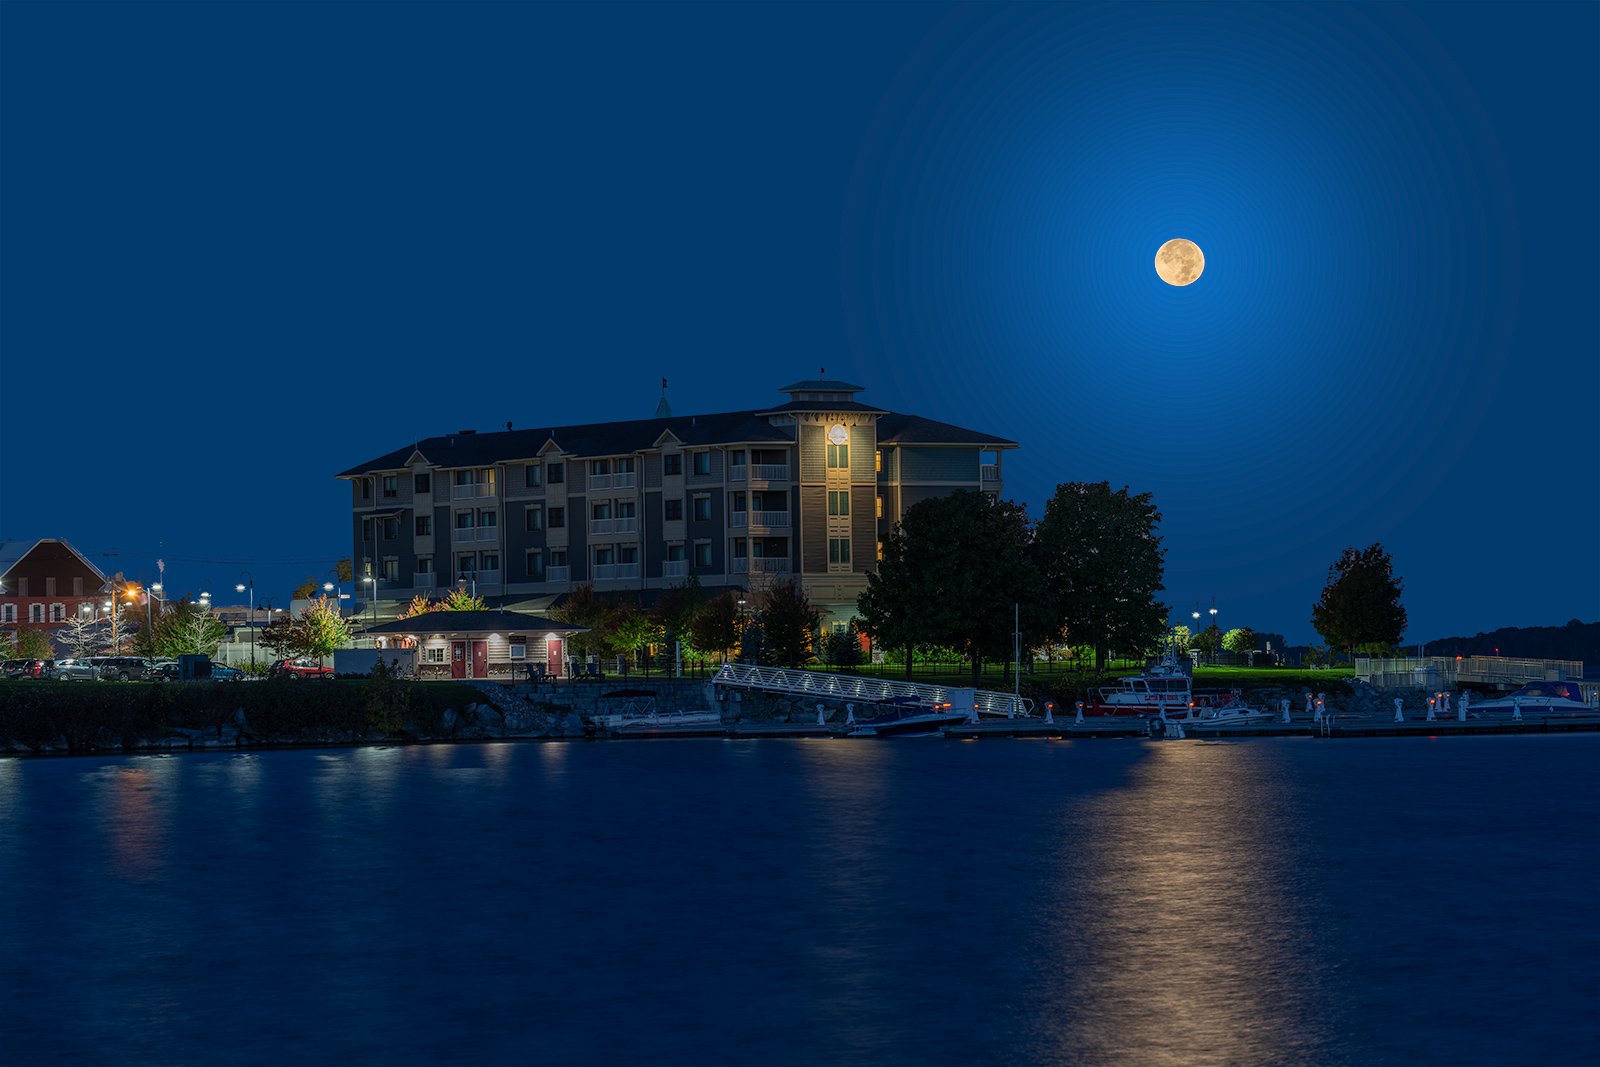 Full Moon over Harbor Hotel